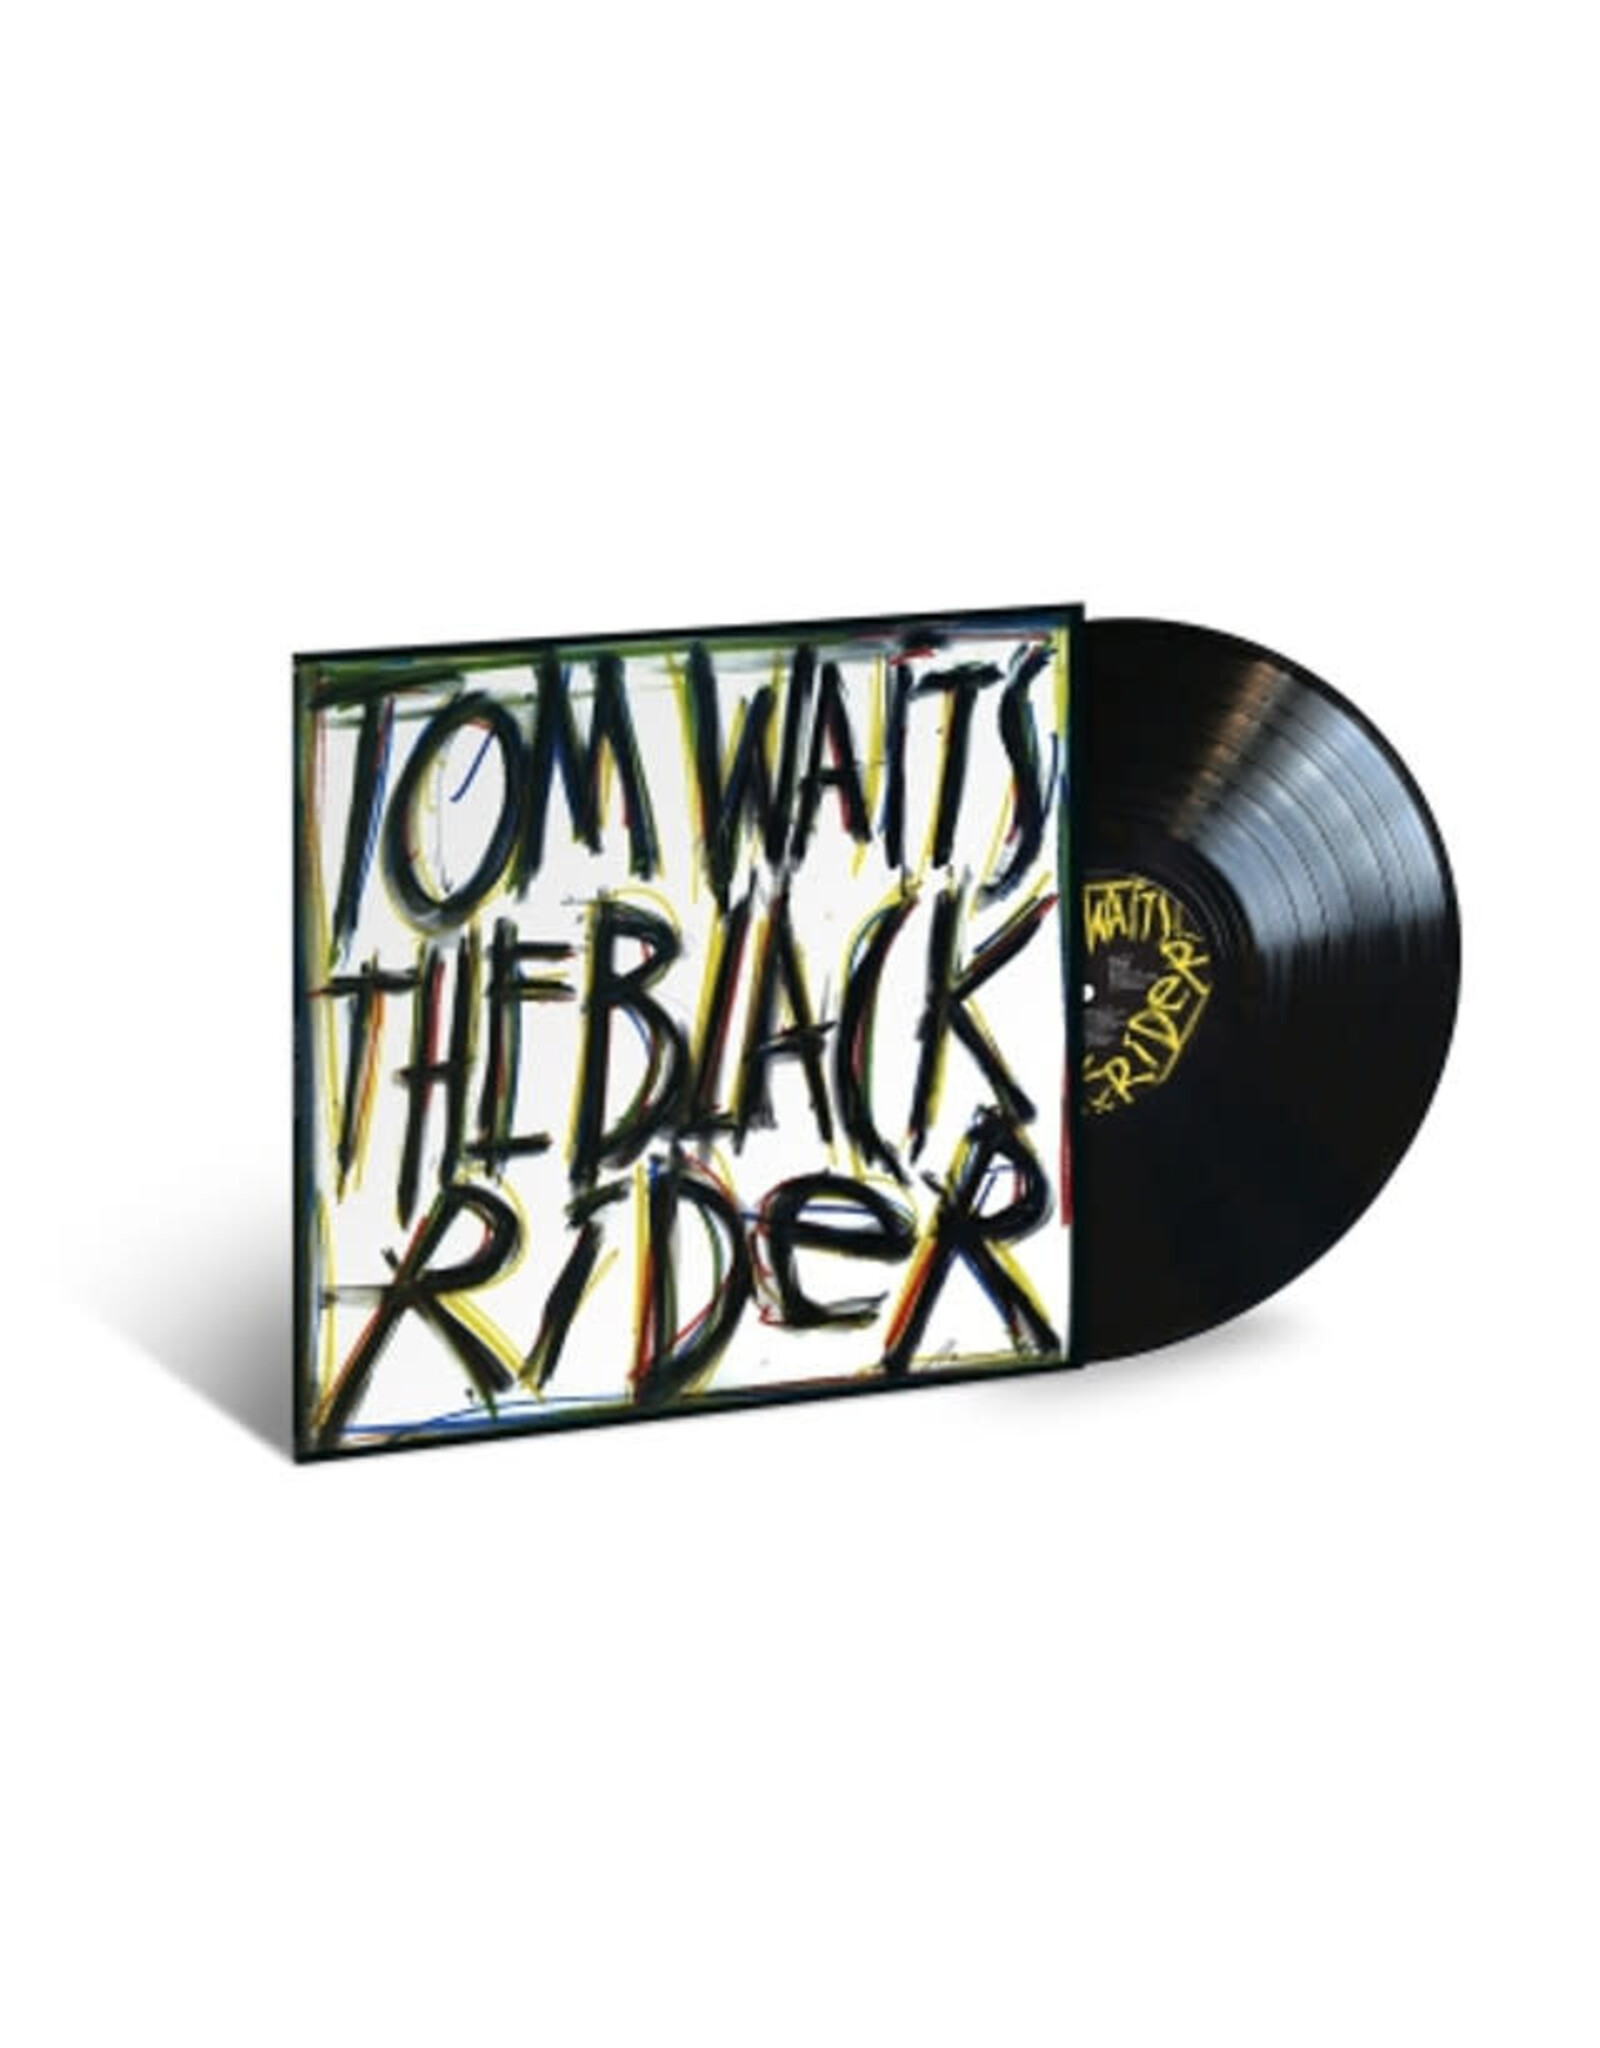 Island Waits, Tom: The Black Rider (180g/remaster) LP